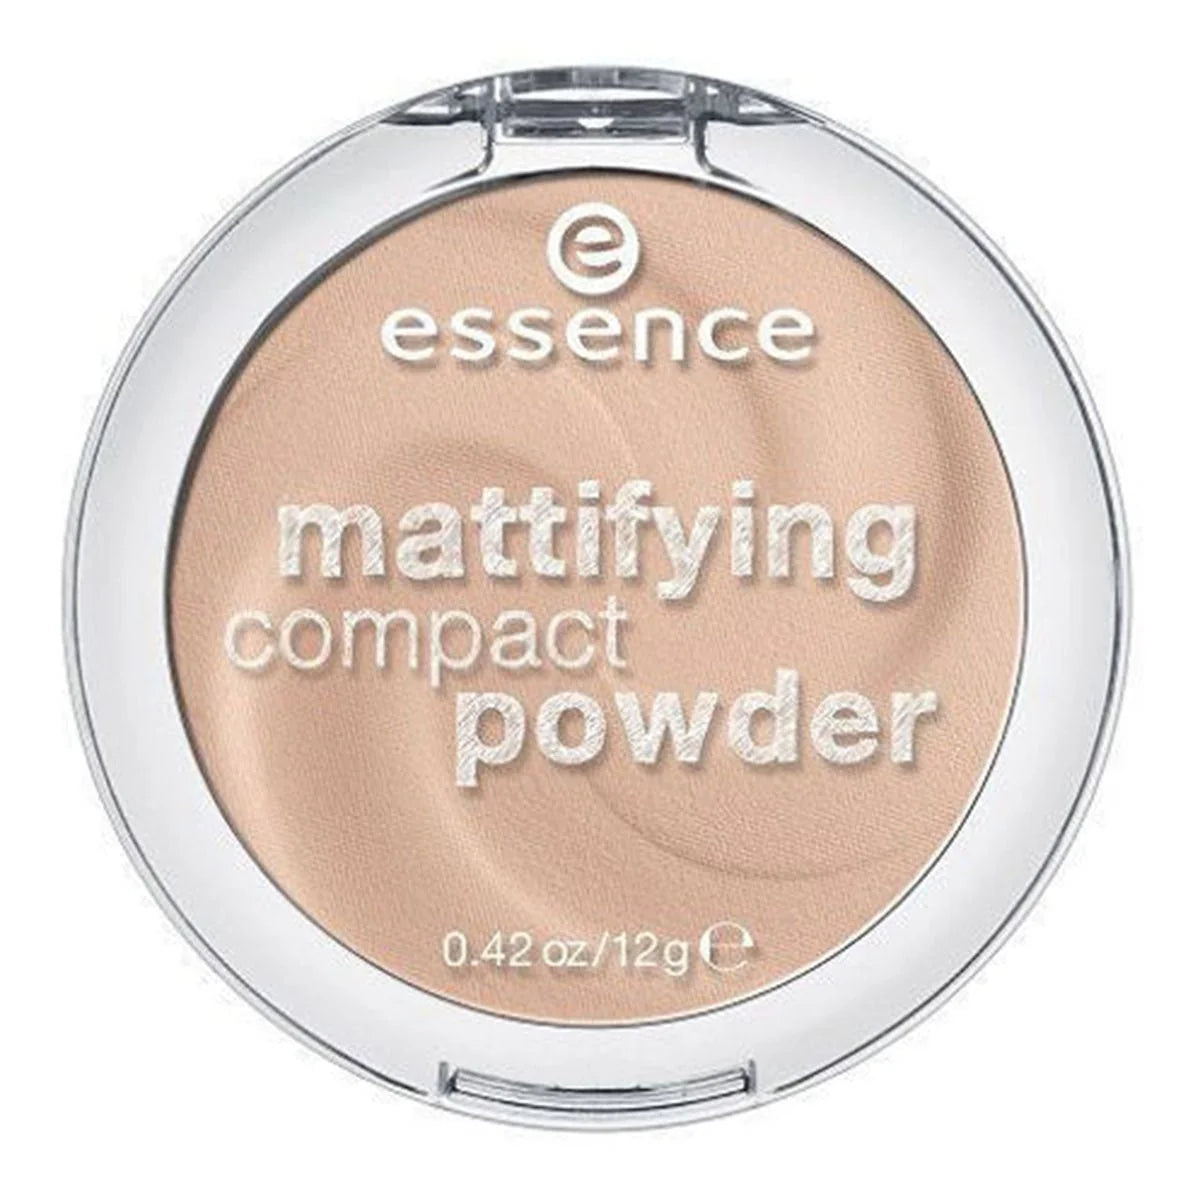  Essence Mattifying Compact Powder - 04 Perfect Beige